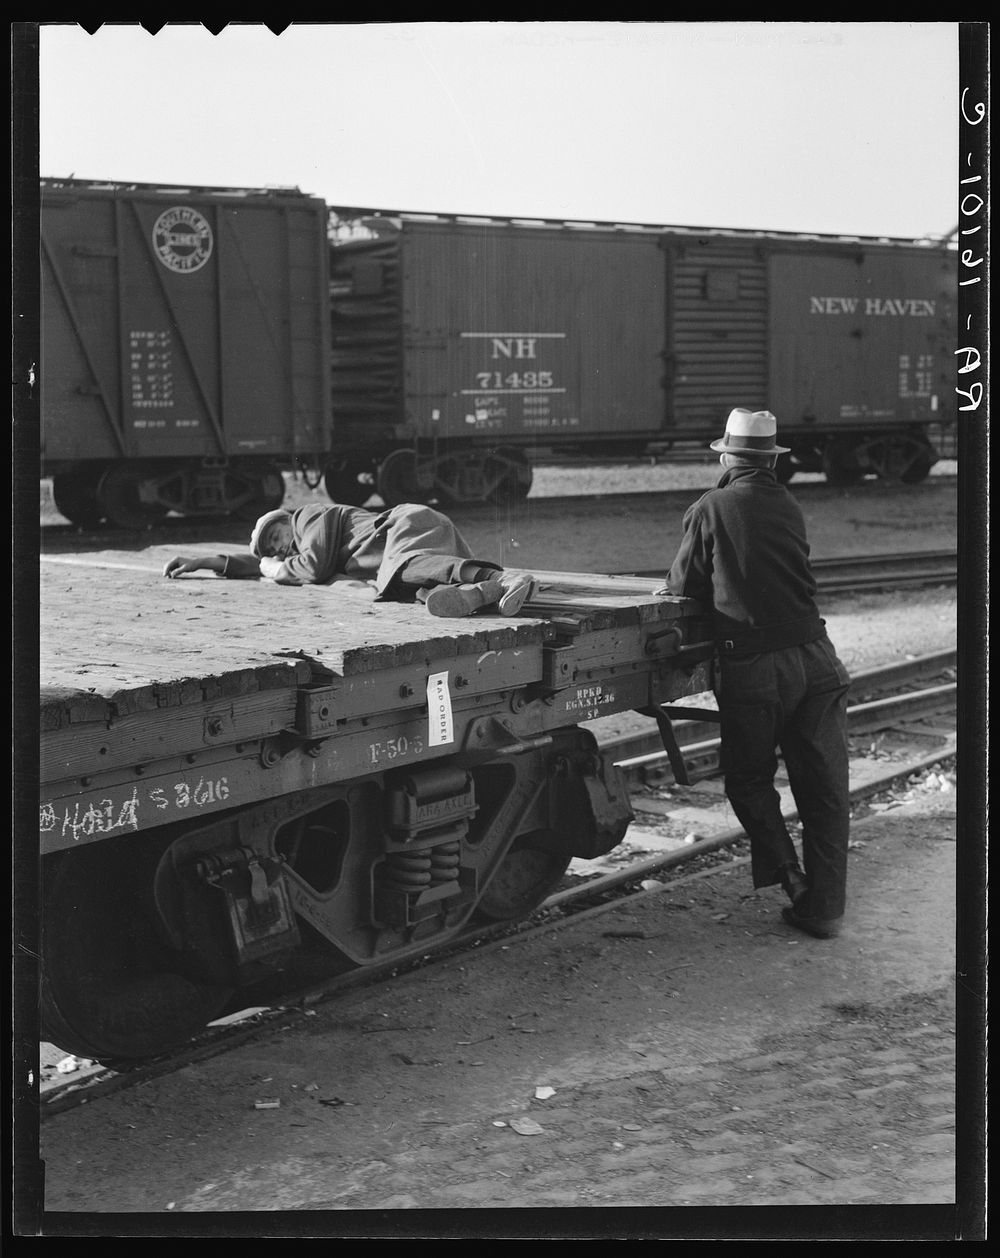 Scene in railroad yard. Sacramento, California. Sourced from the Library of Congress.